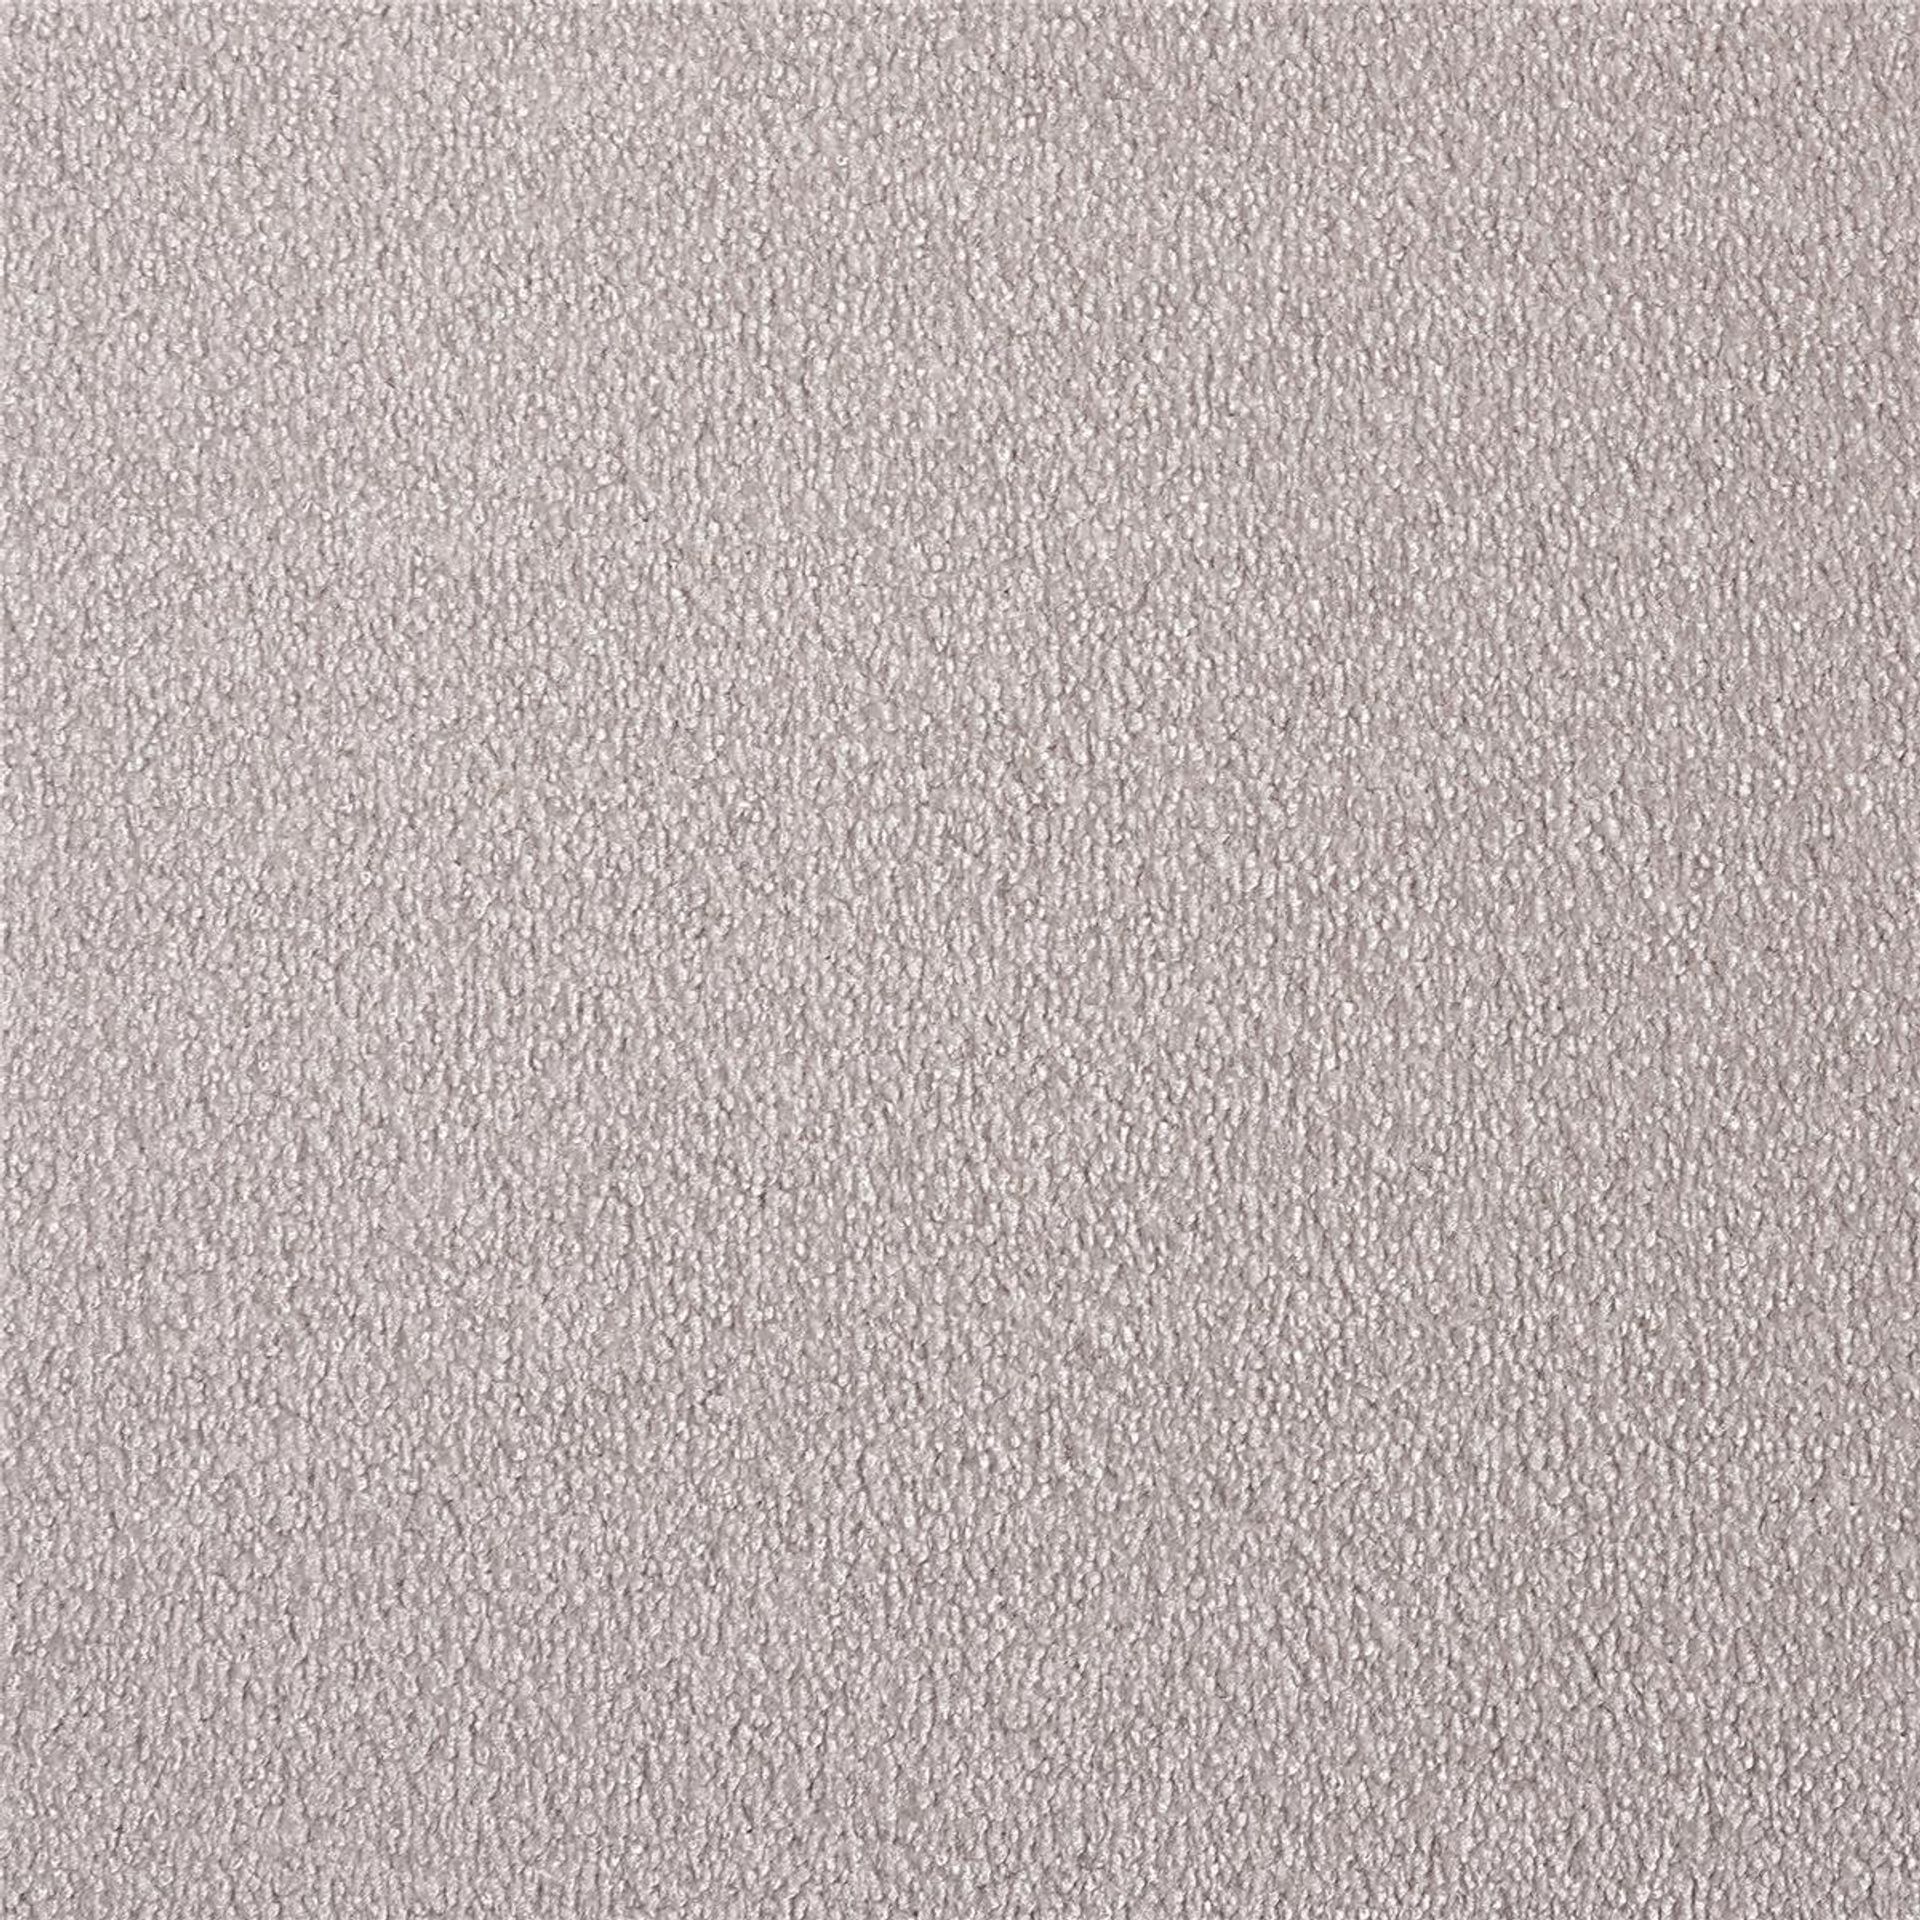 Teppichboden Infloor-Girloon Cosy Velours Weiß 501 uni - Rollenbreite 400 cm